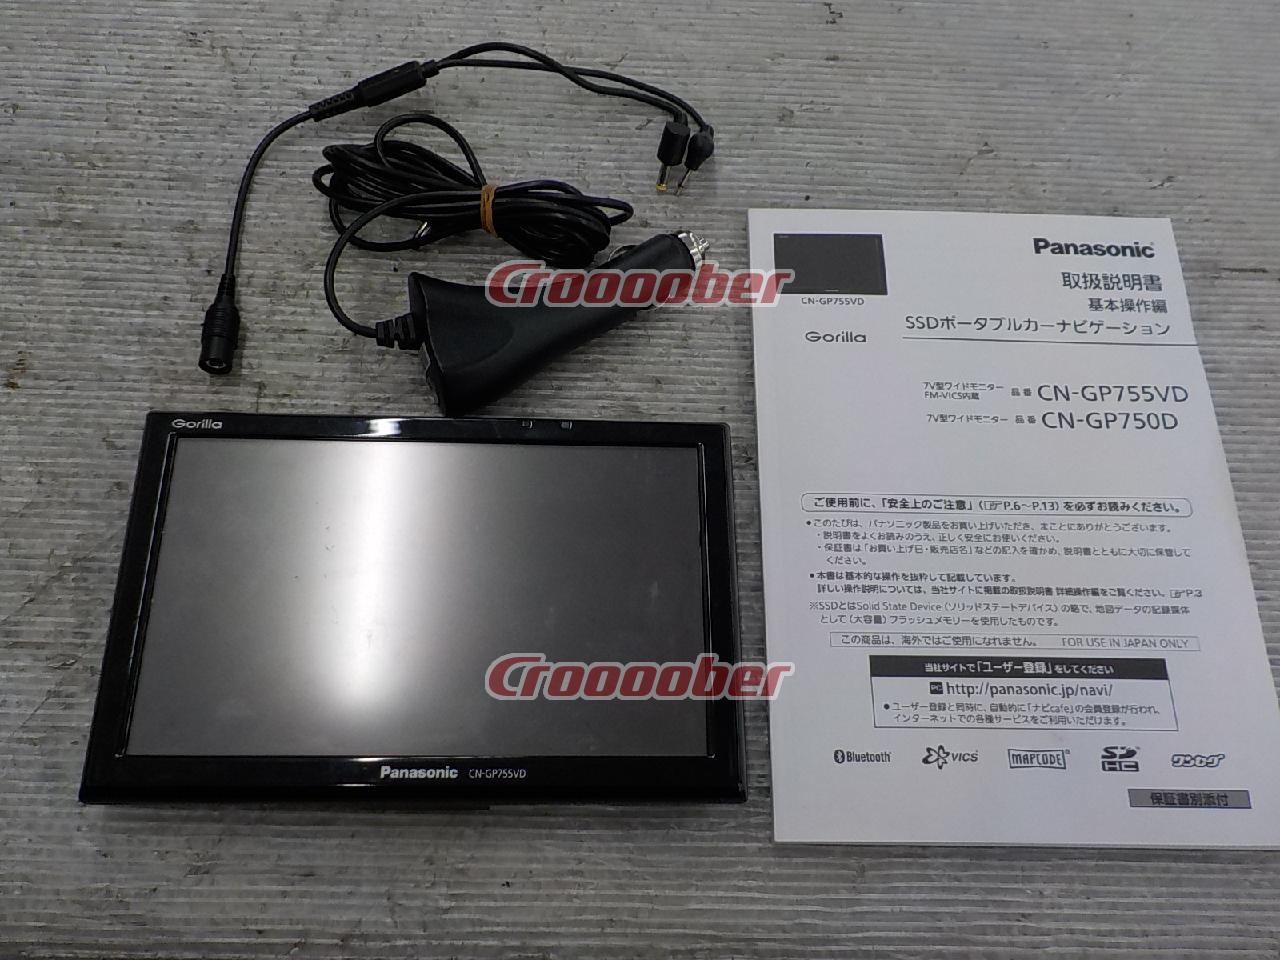 Panasonic CN-GP755VD ※ VICS Antenna Stand Shortage | Portable 